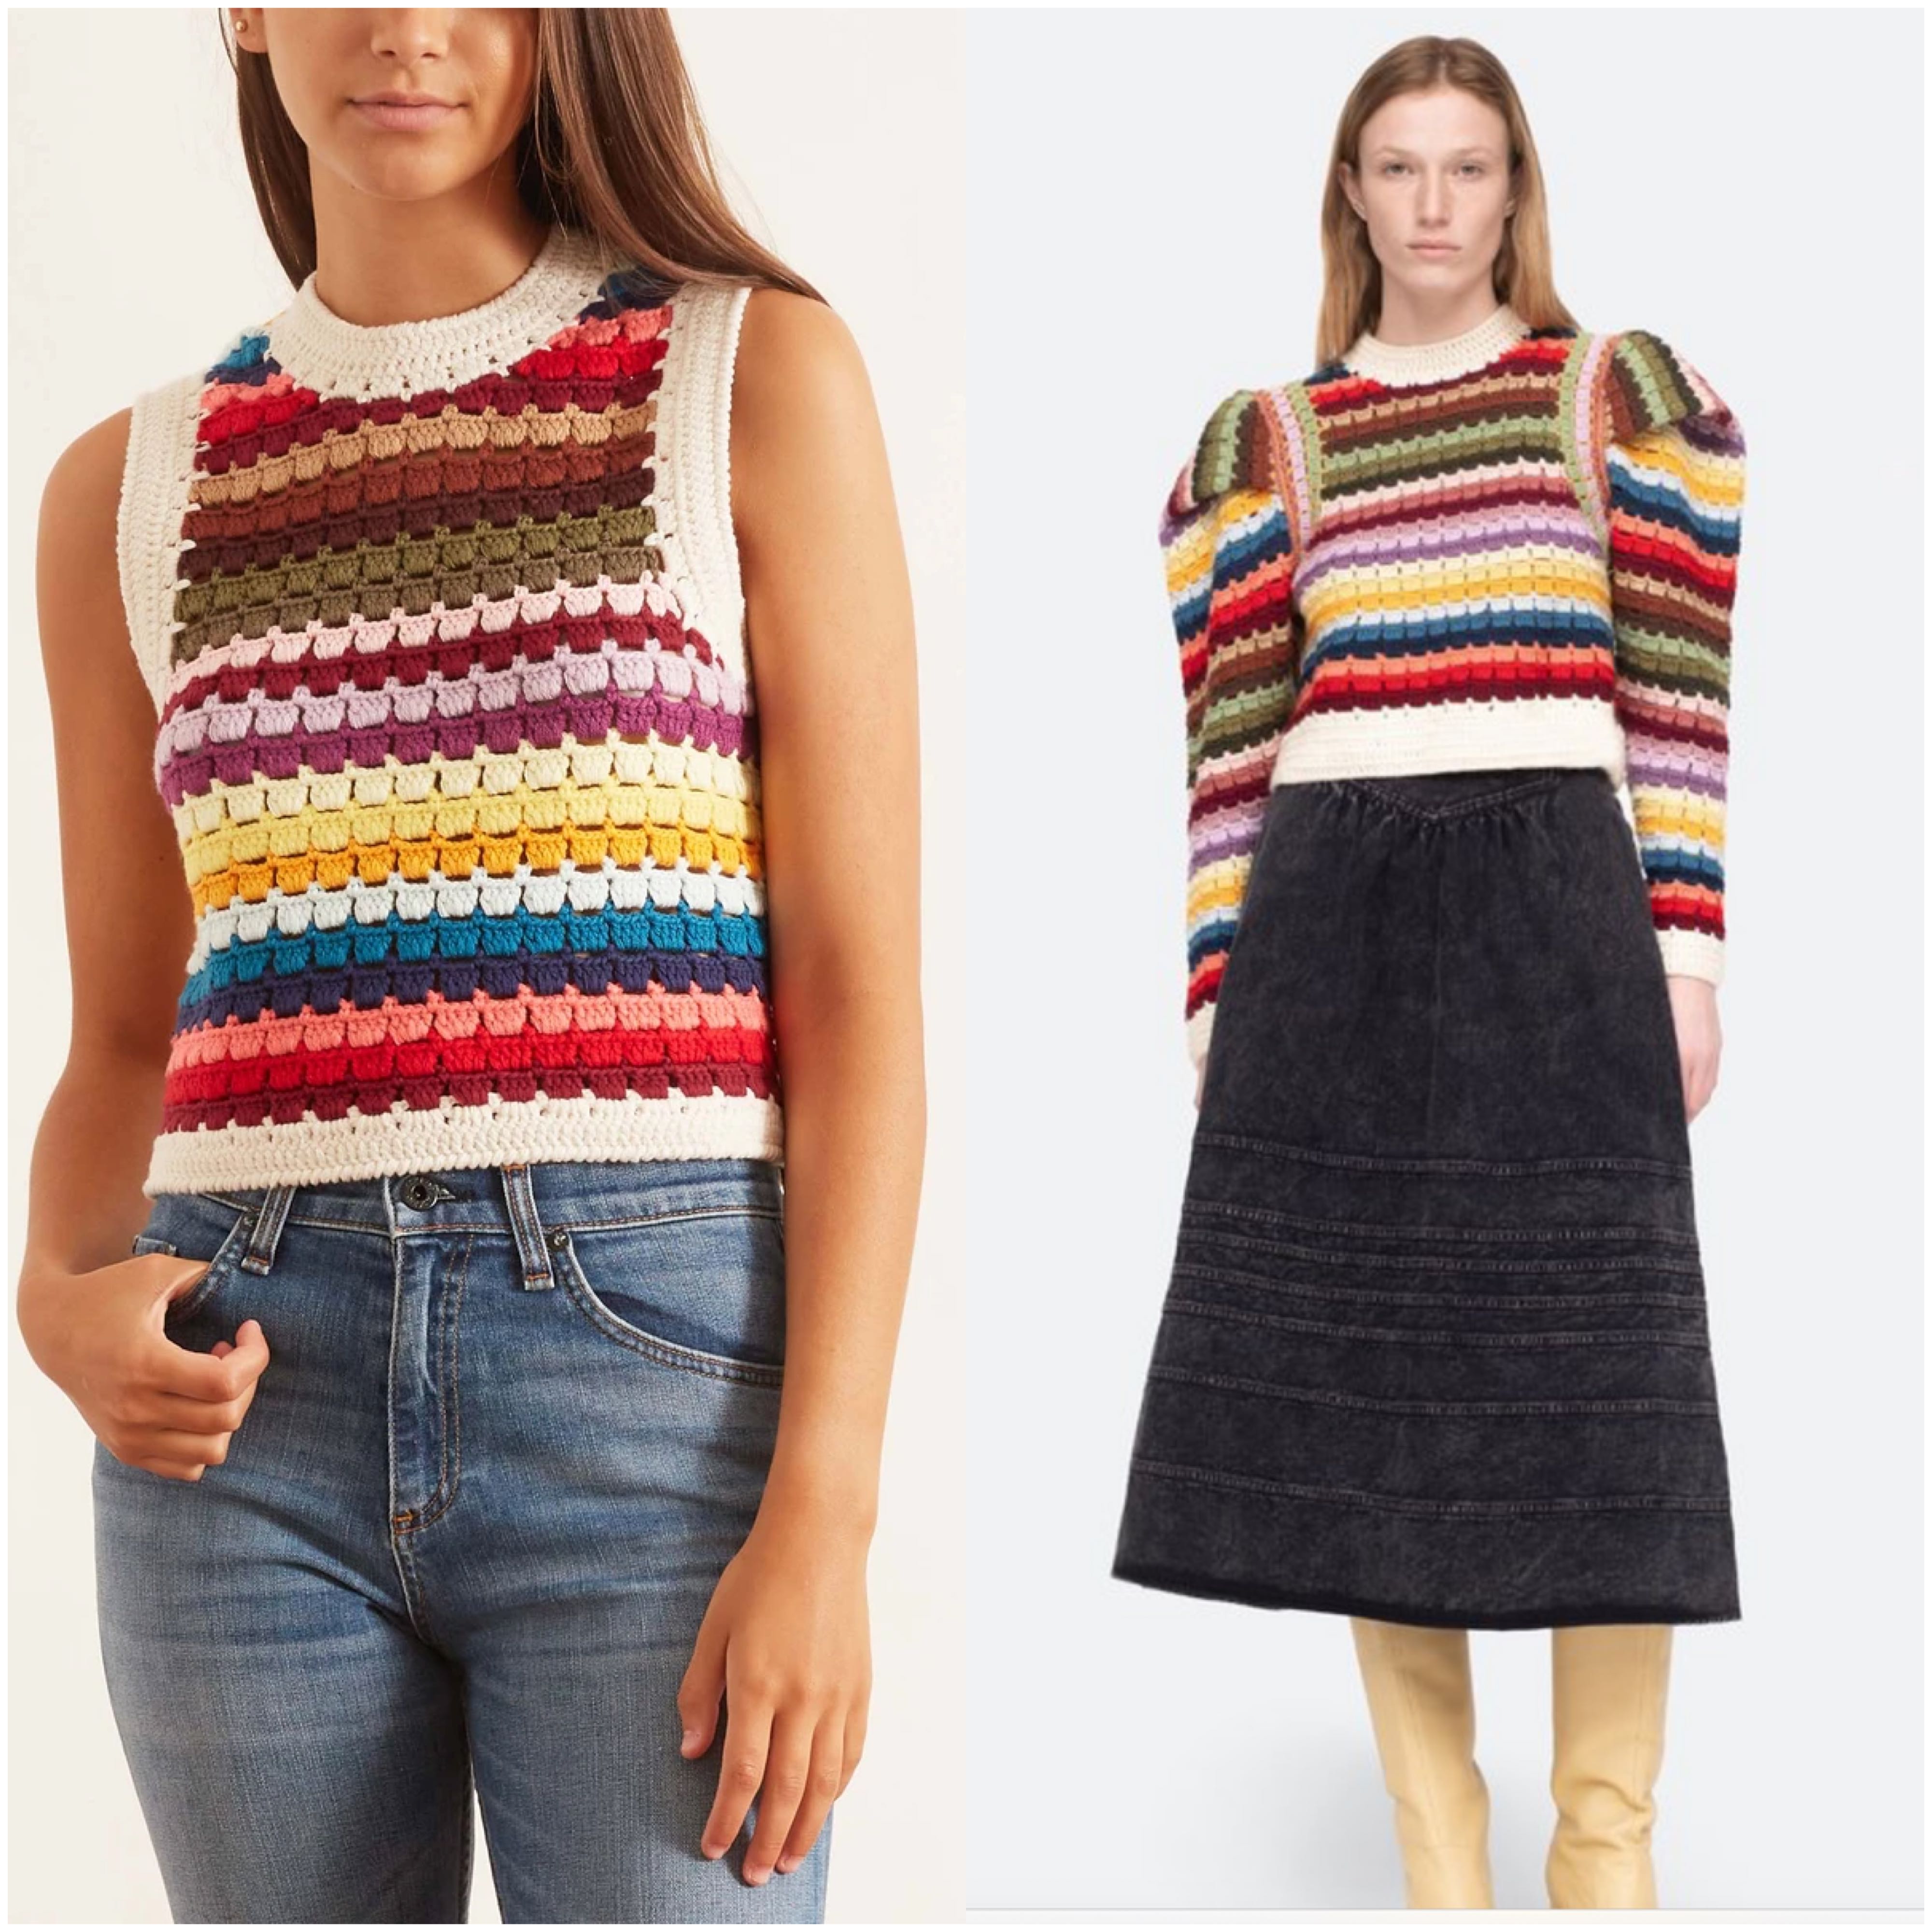 Crochet cotton vest tutorial  inspired by $600 Sea Ziggy Crochet Sweater  Vest 